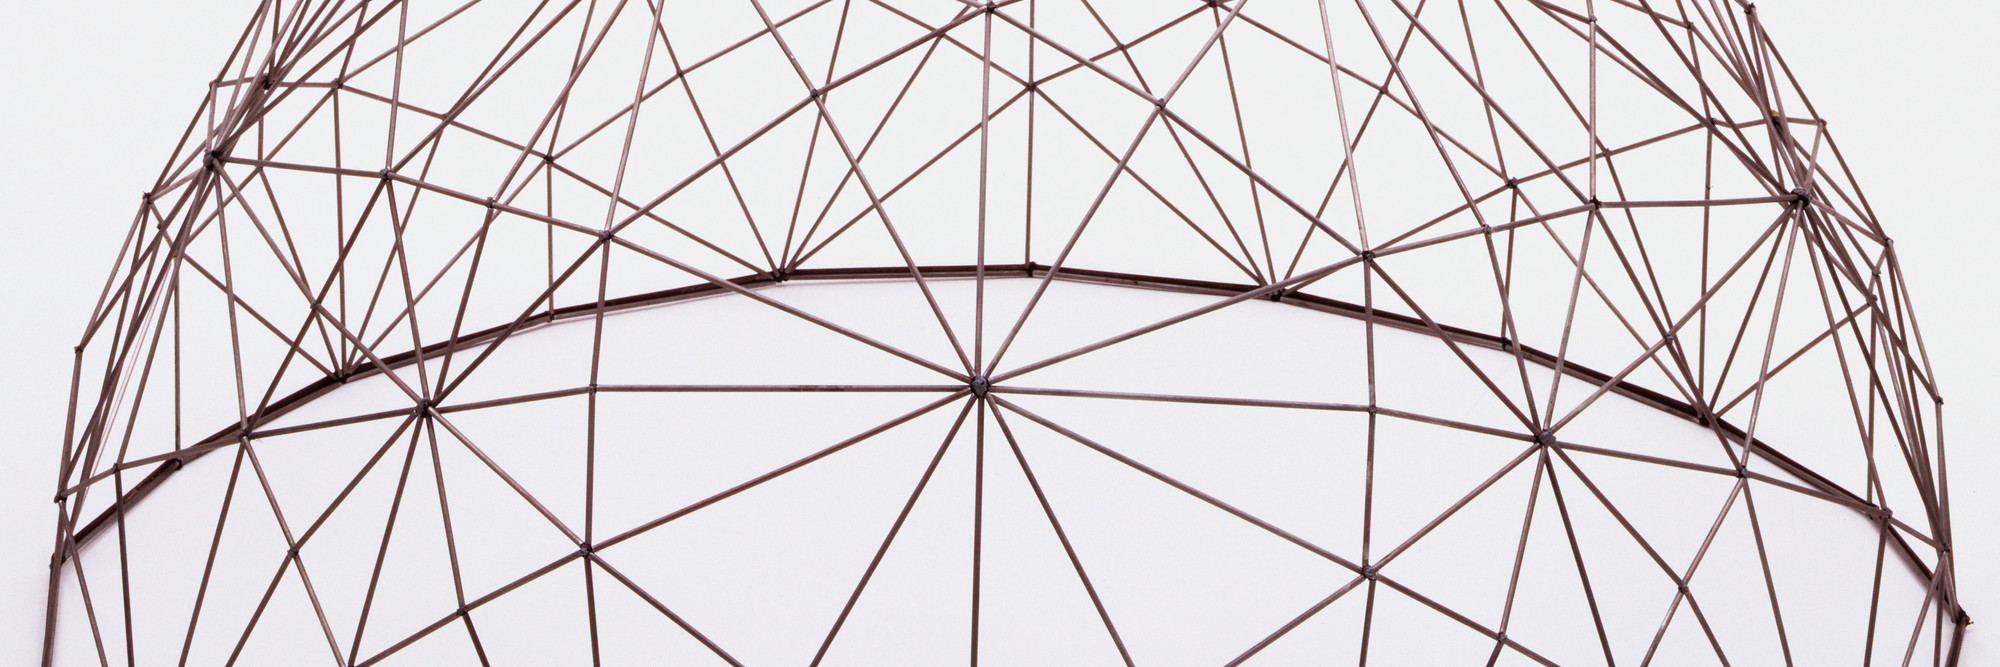 R. Buckminster Fuller. Geodesic Dome. 1952. Elastic cord and metal, h. 20 1/4&#34; (51.4 cm), diam. 39&#34; (99.1 cm). Model maker: Alan Borg, Joan Forrester, Ron Goodfellow, John Hampshire, T. C. Howard, Fred Taylor. Gift of the architect